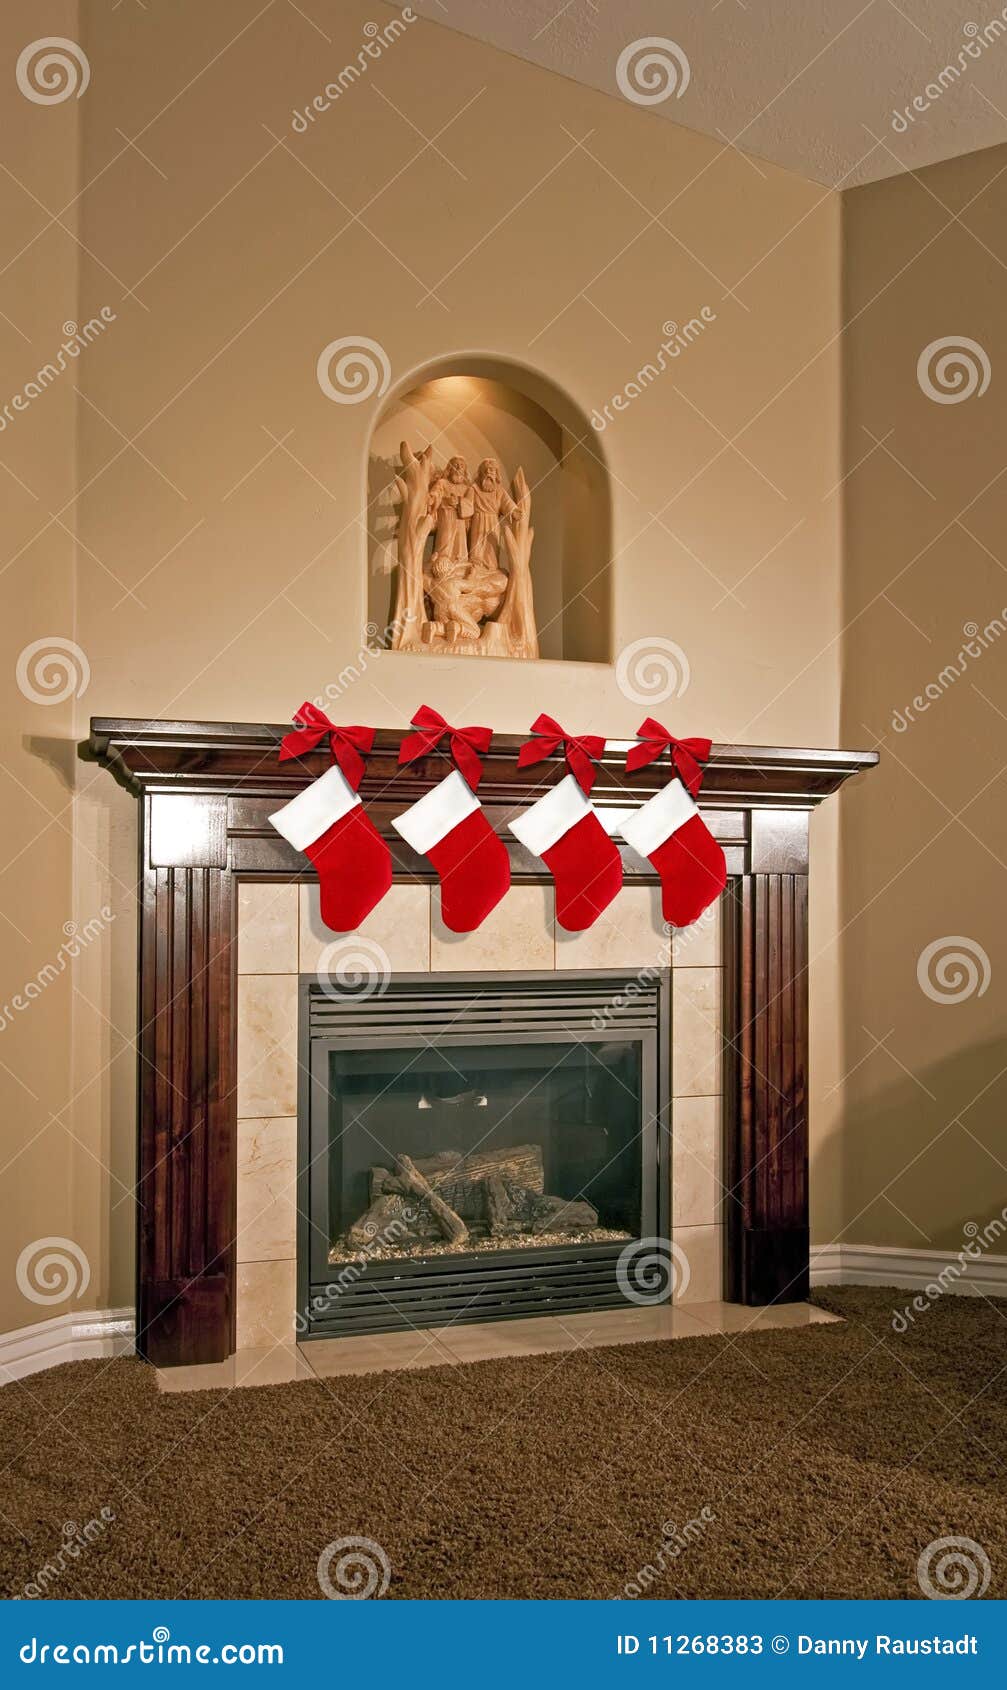 christmas holiday stockings on fireplace mantel